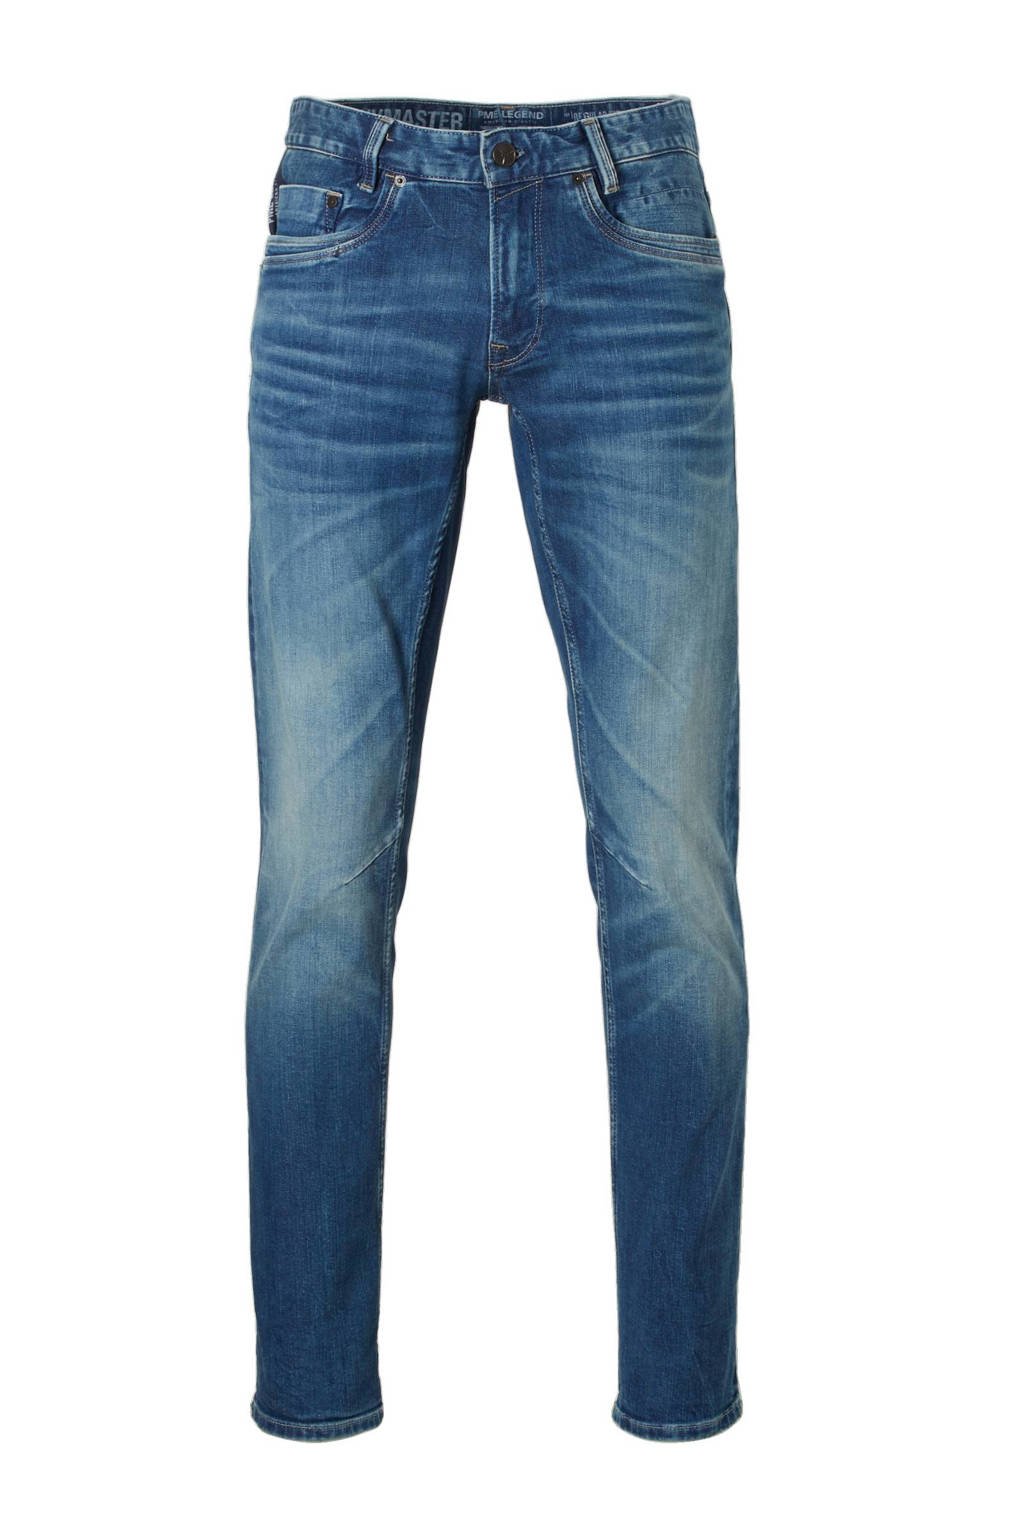 gijzelaar Lift Glimmend PME Legend relaxed tapered fit jeans Skymaster blue light denim | wehkamp